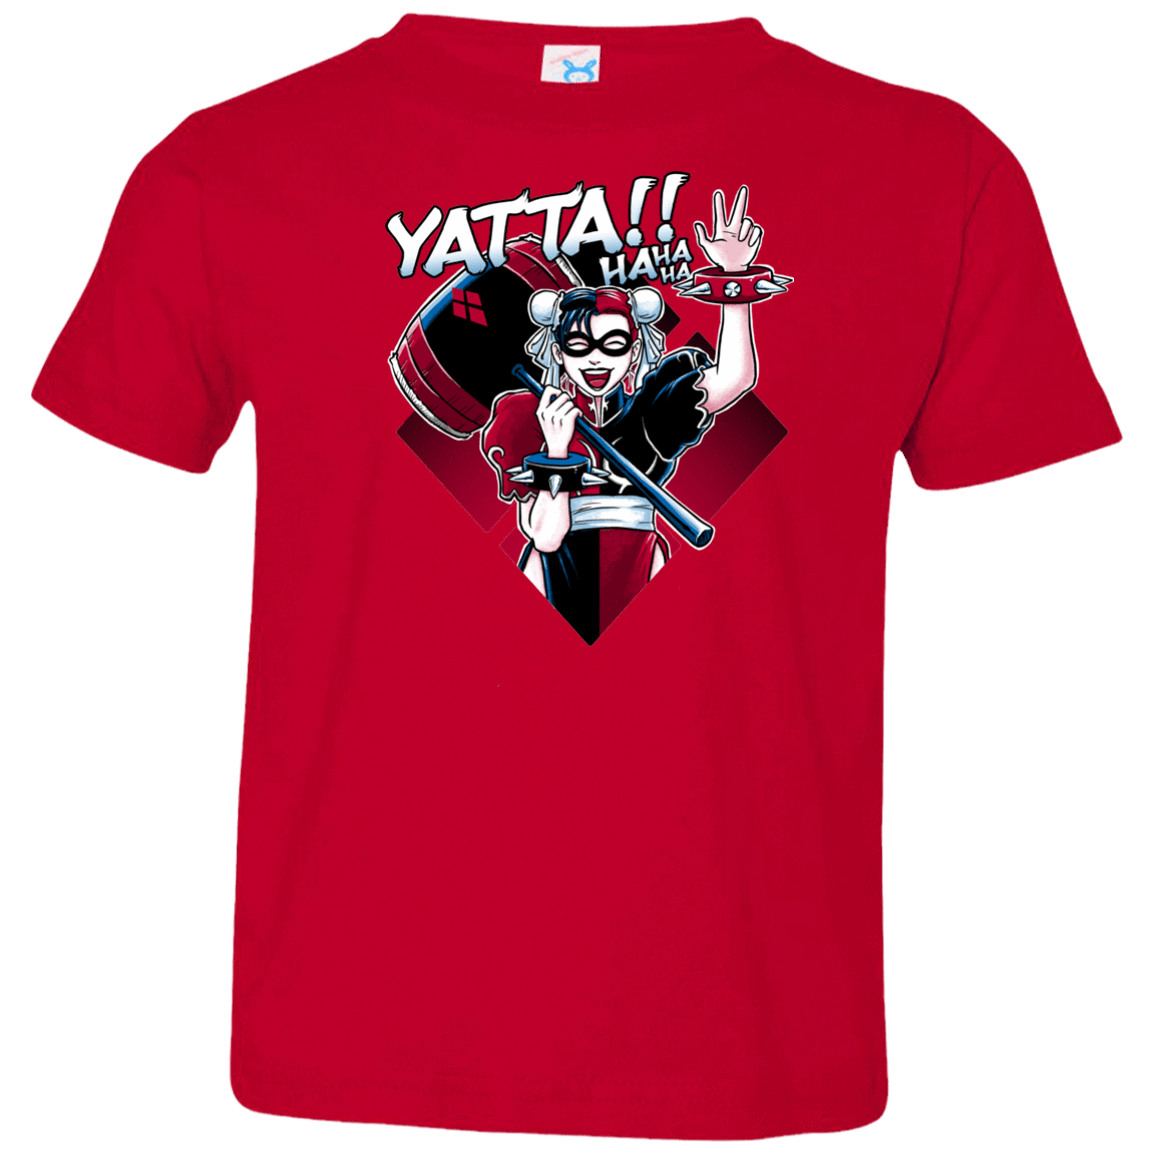 T-Shirts Red / 2T Harley Yatta Toddler Premium T-Shirt